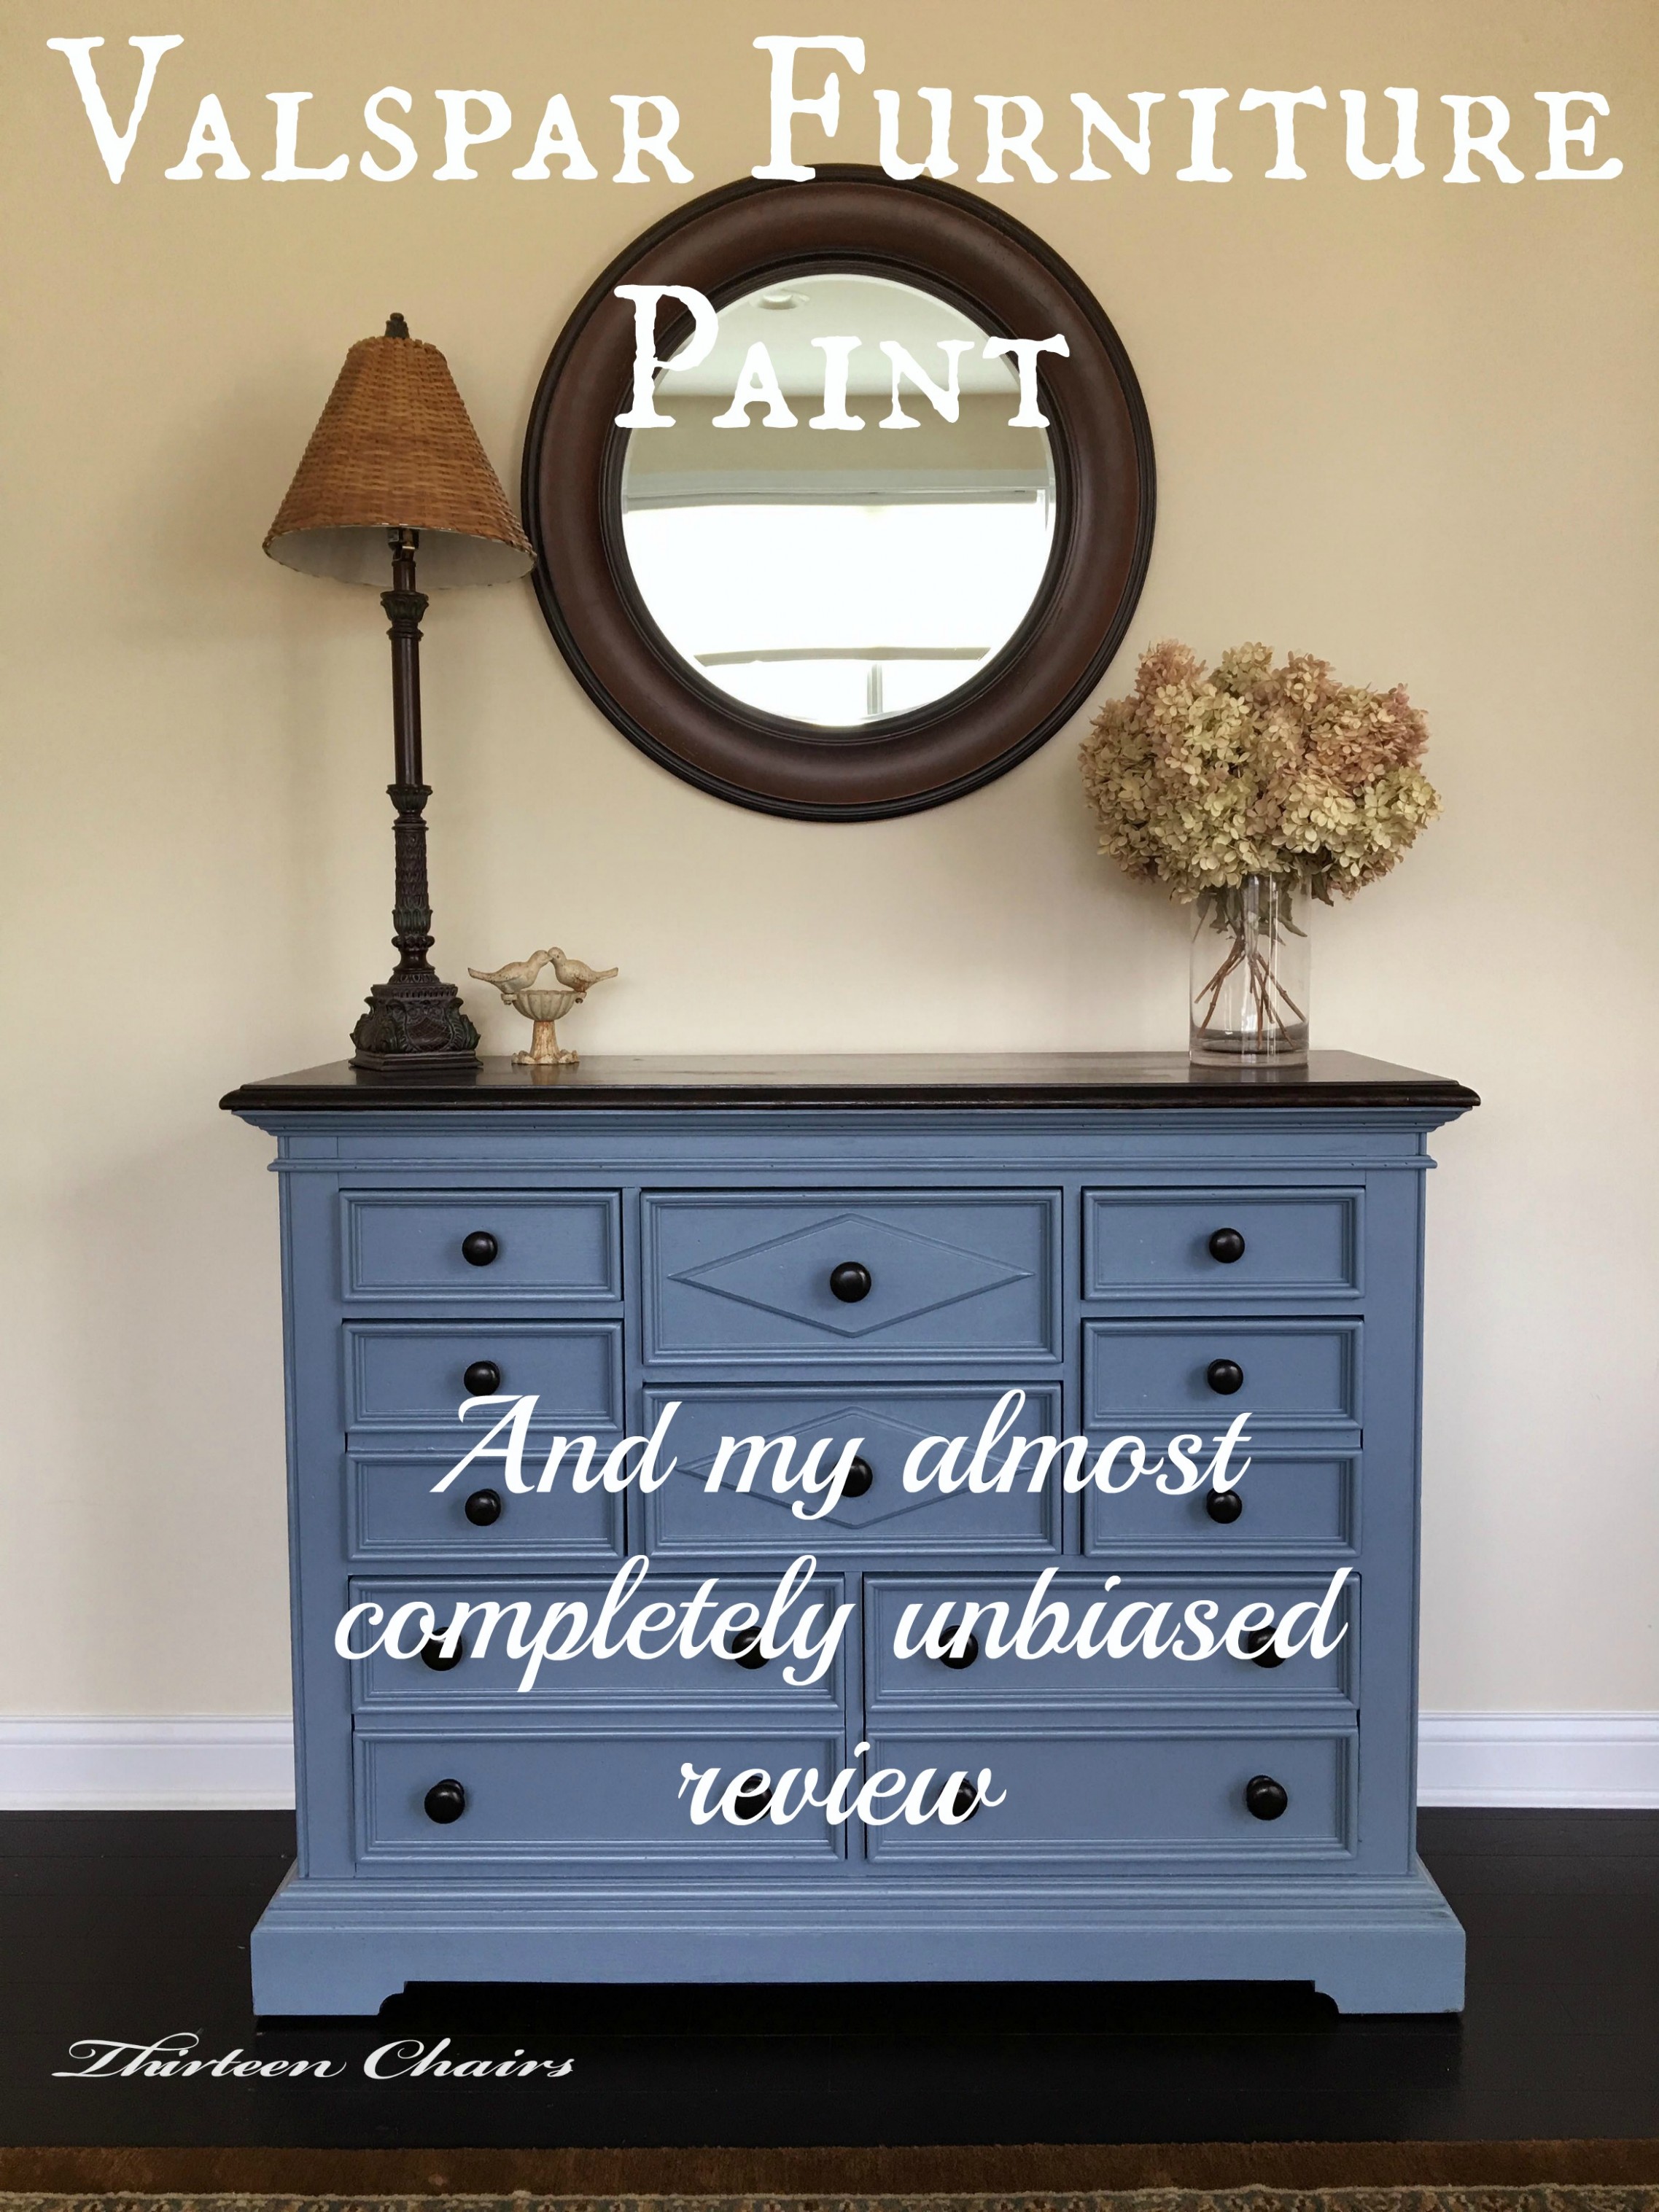 Painting With Valspar Furniture Paint Can You Paint Latex Paint Over Chalk Paint